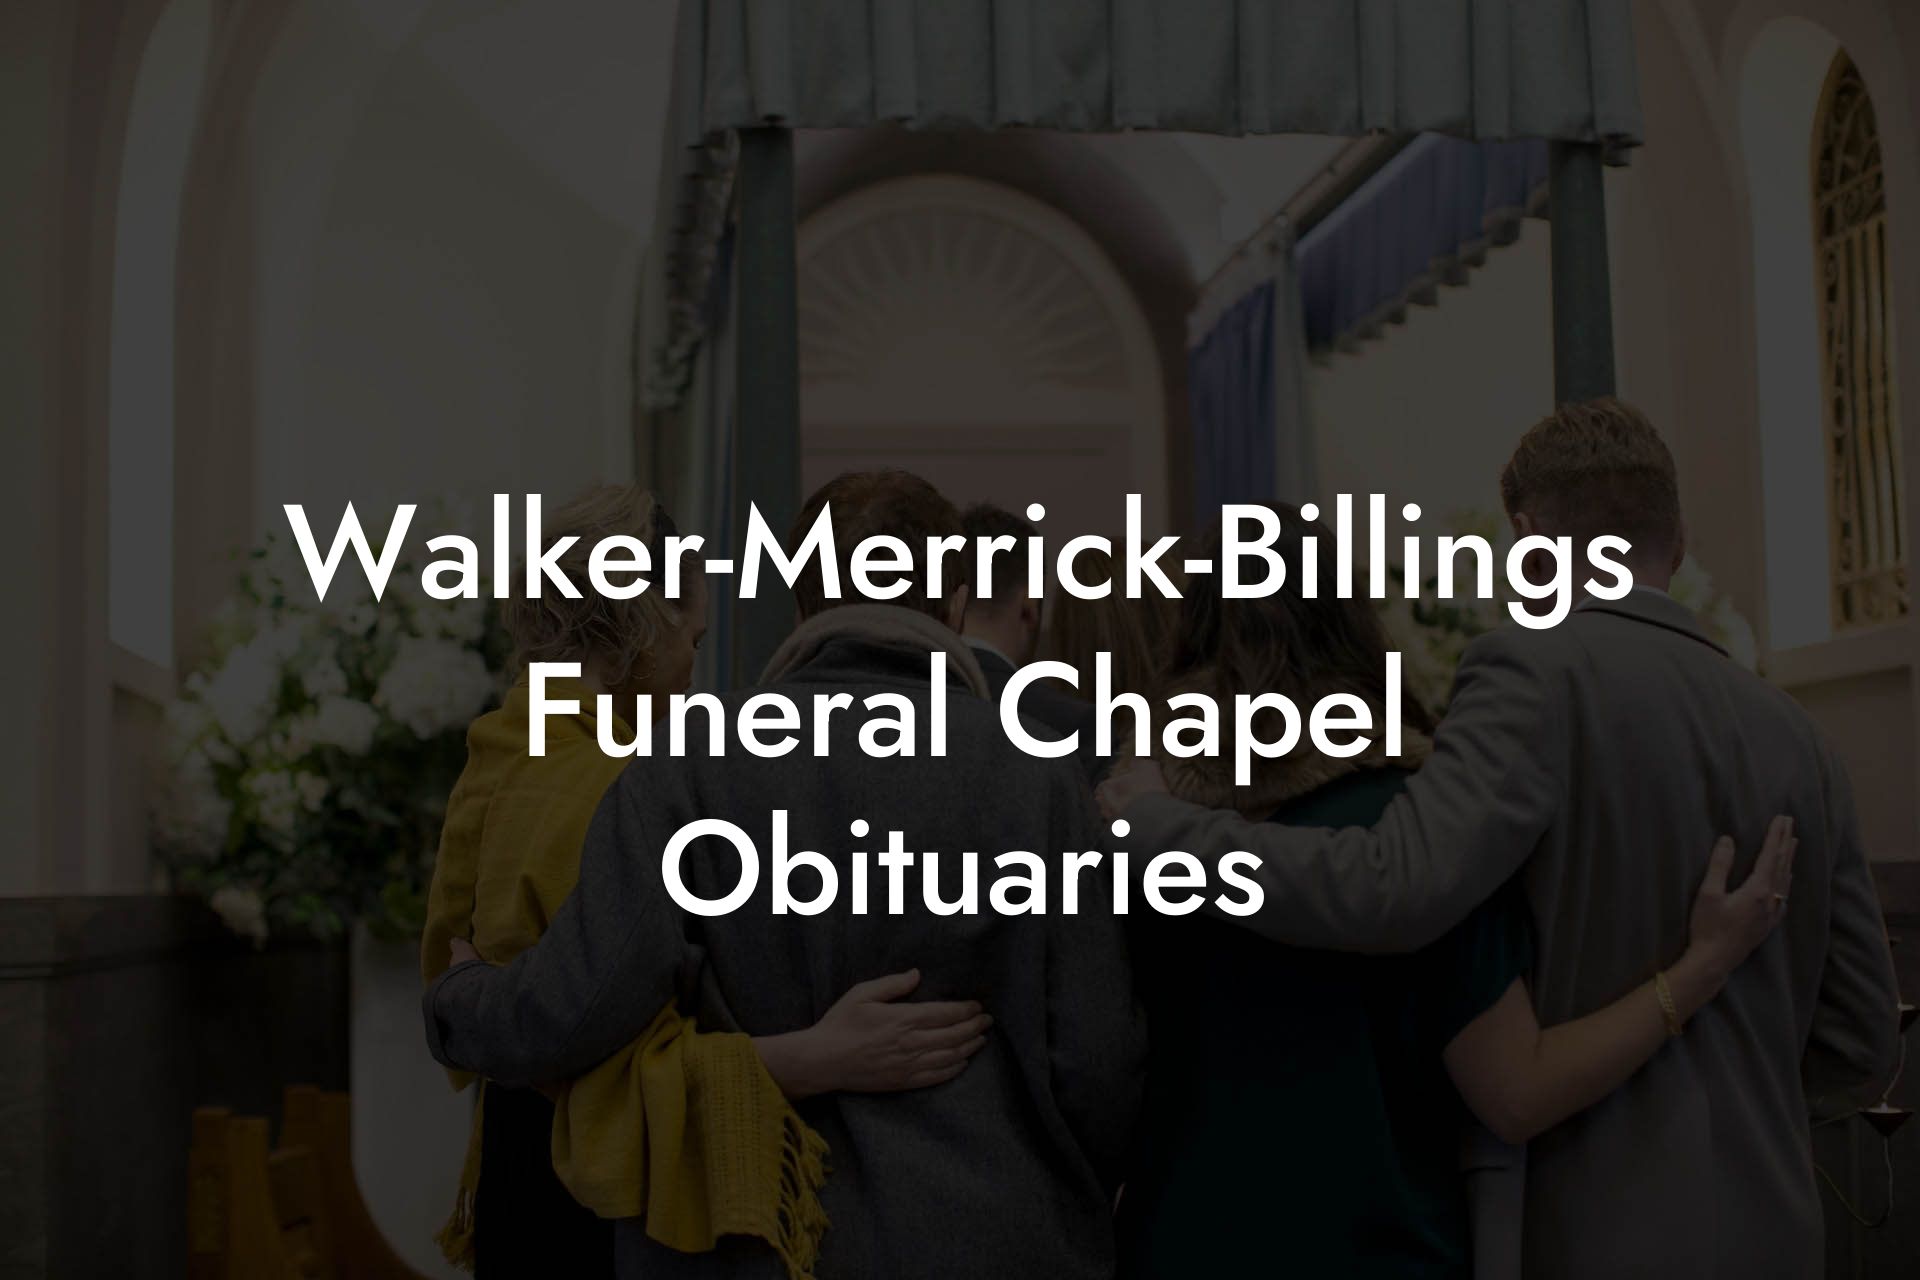 Walker-Merrick-Billings Funeral Chapel Obituaries